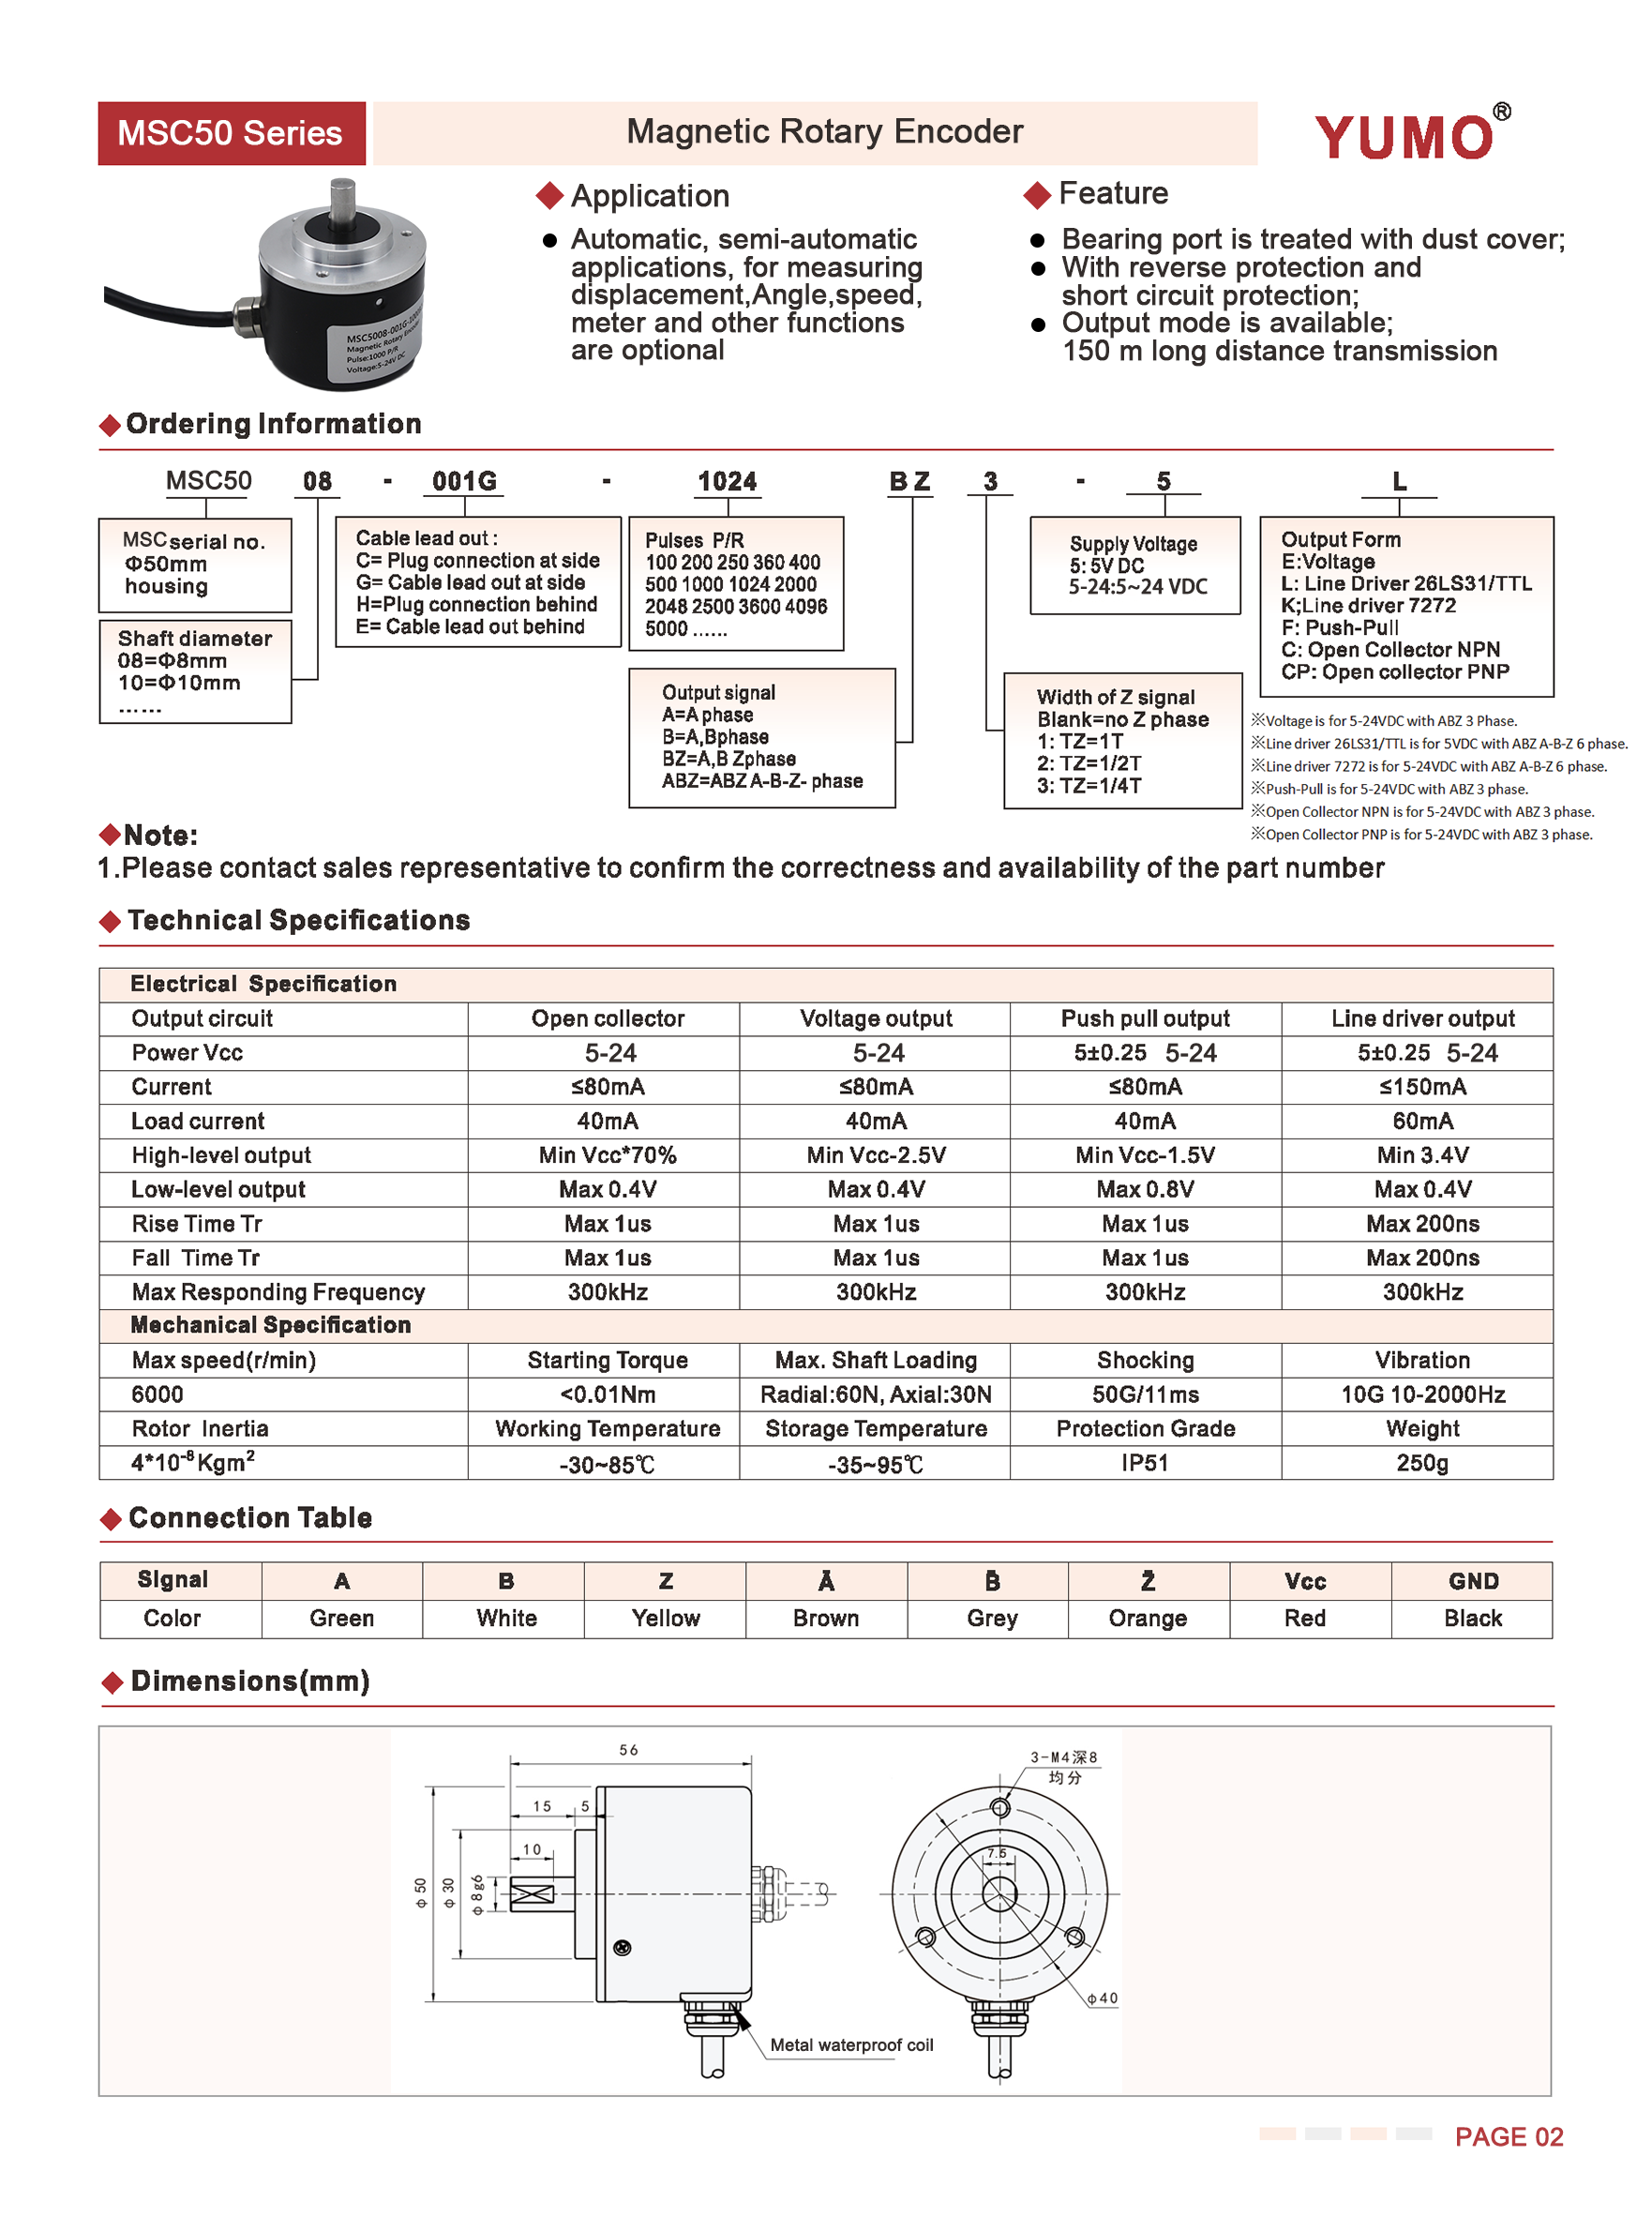 Magnetic Rotary Encoder MSC50